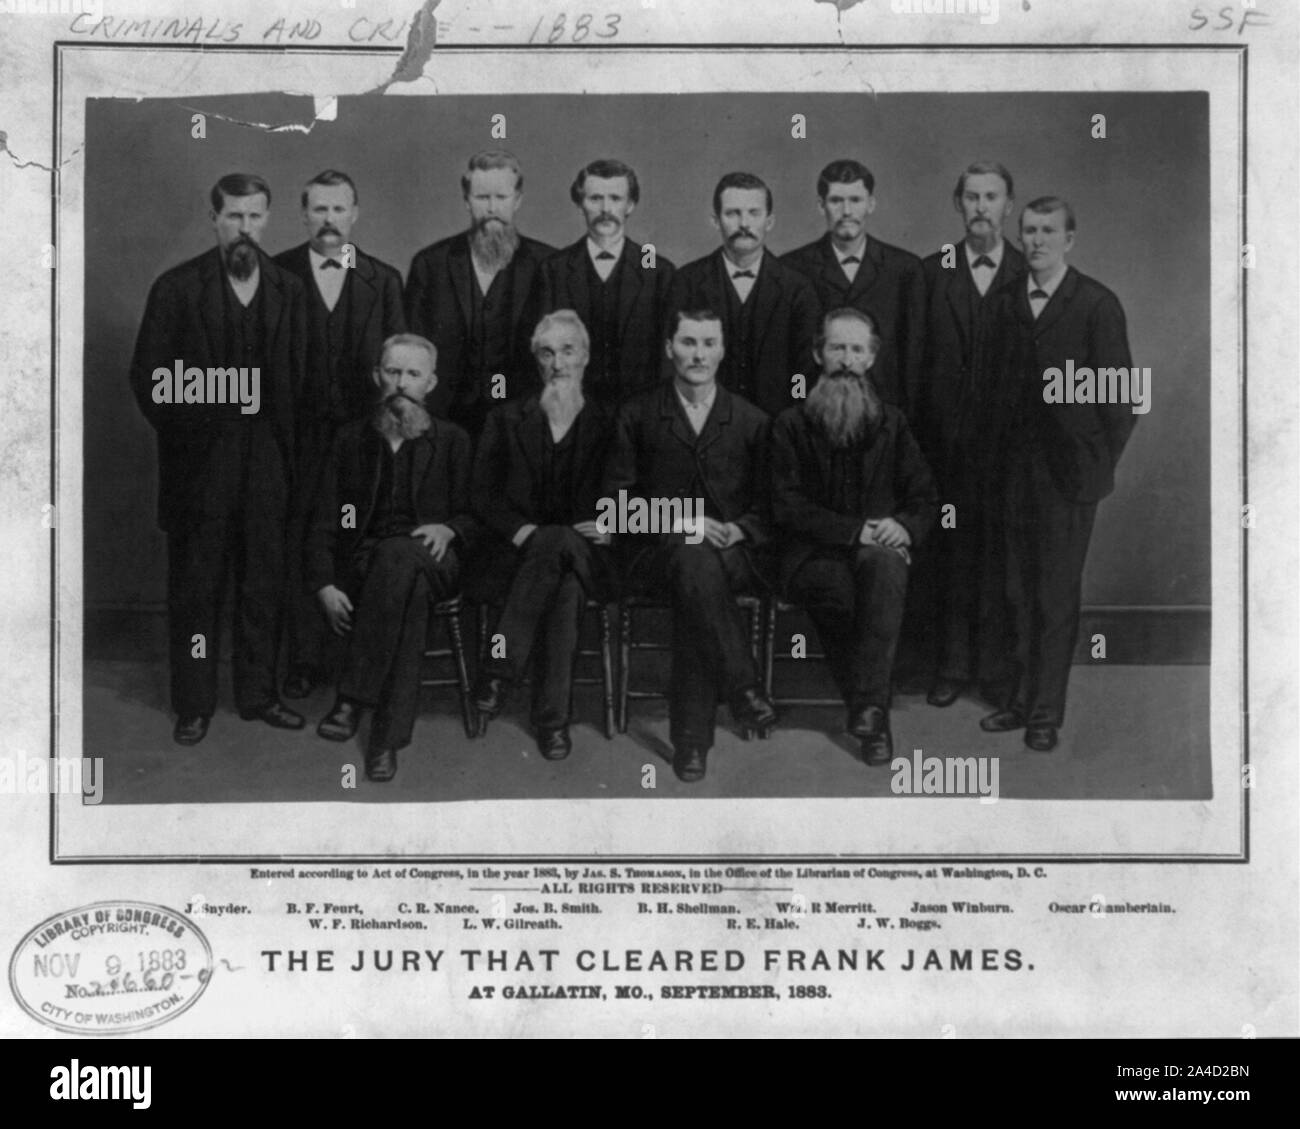 The jury that cleared Frank James, at Gallatin, Mo., September 1883: J. Snyder, B.F. Feurt, C.R. Nance, Jos. B. Smith, B.H. Shellman, William R. Merritt, Jason Winburn, Oscar Chamberlain, W.F. Richardson, L.W. Gilreath, R.E. Hale and J.W. Boggs posed Stock Photo